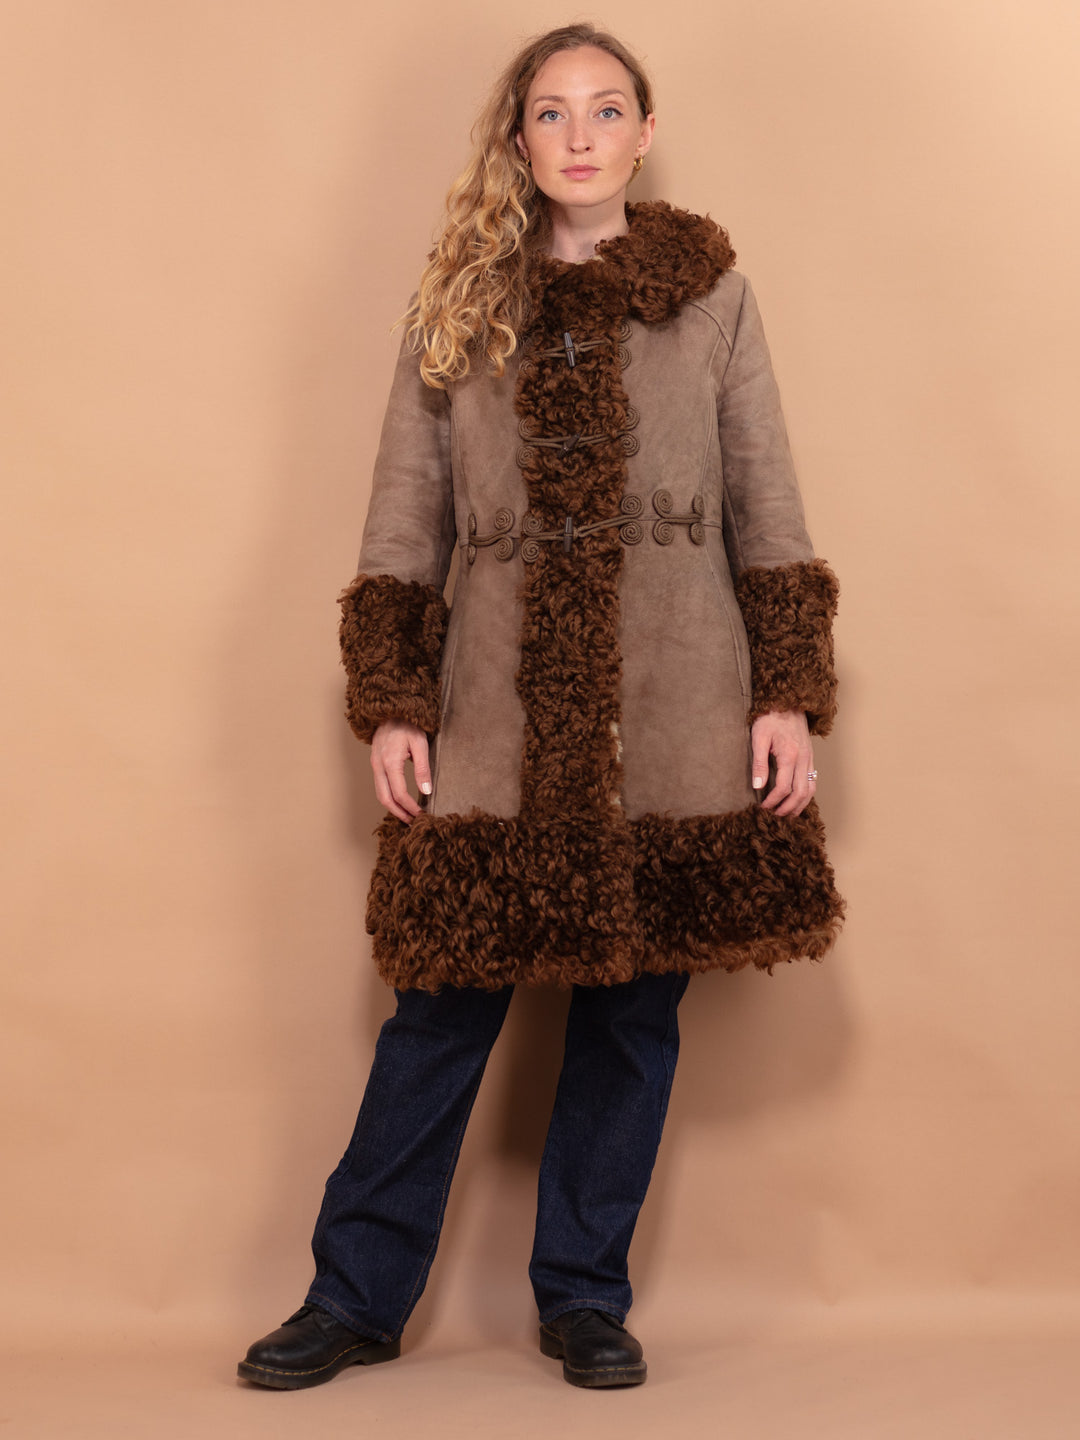 Penny Lane Sheepskin Coat, Size Small S, Beige Suede Coat, Retro Coat, 70s Outerwear, Western Boho Style Outerwear, Vintage Suede Overcoat